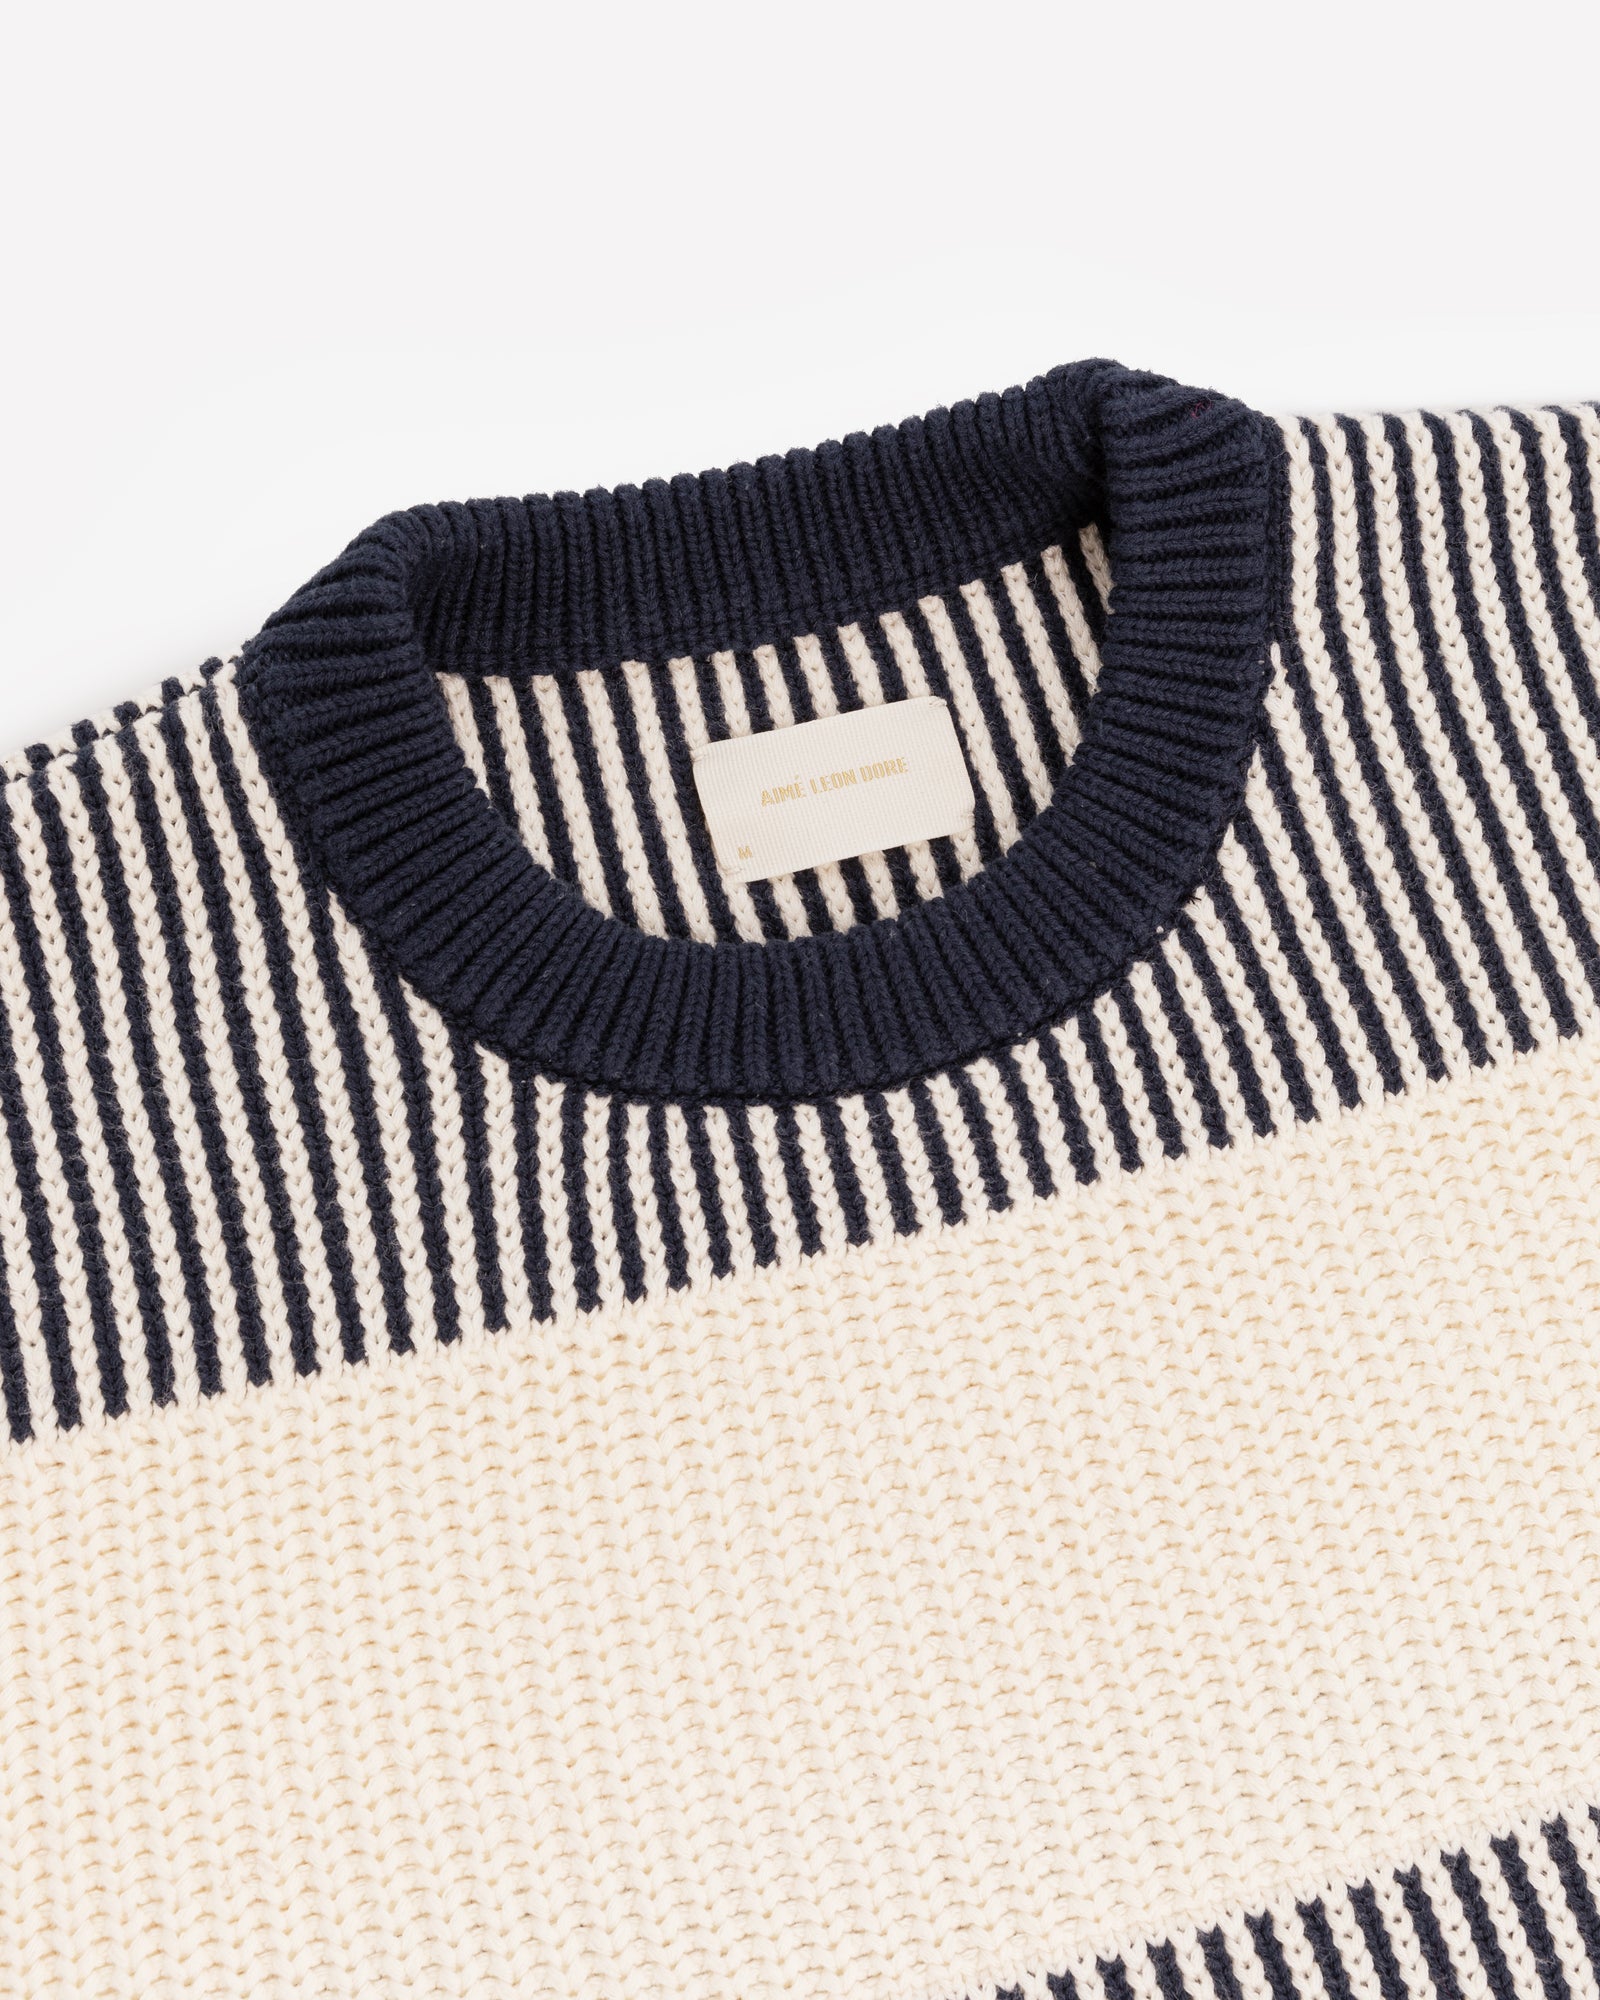 Striped Shaker Stitch Sweater